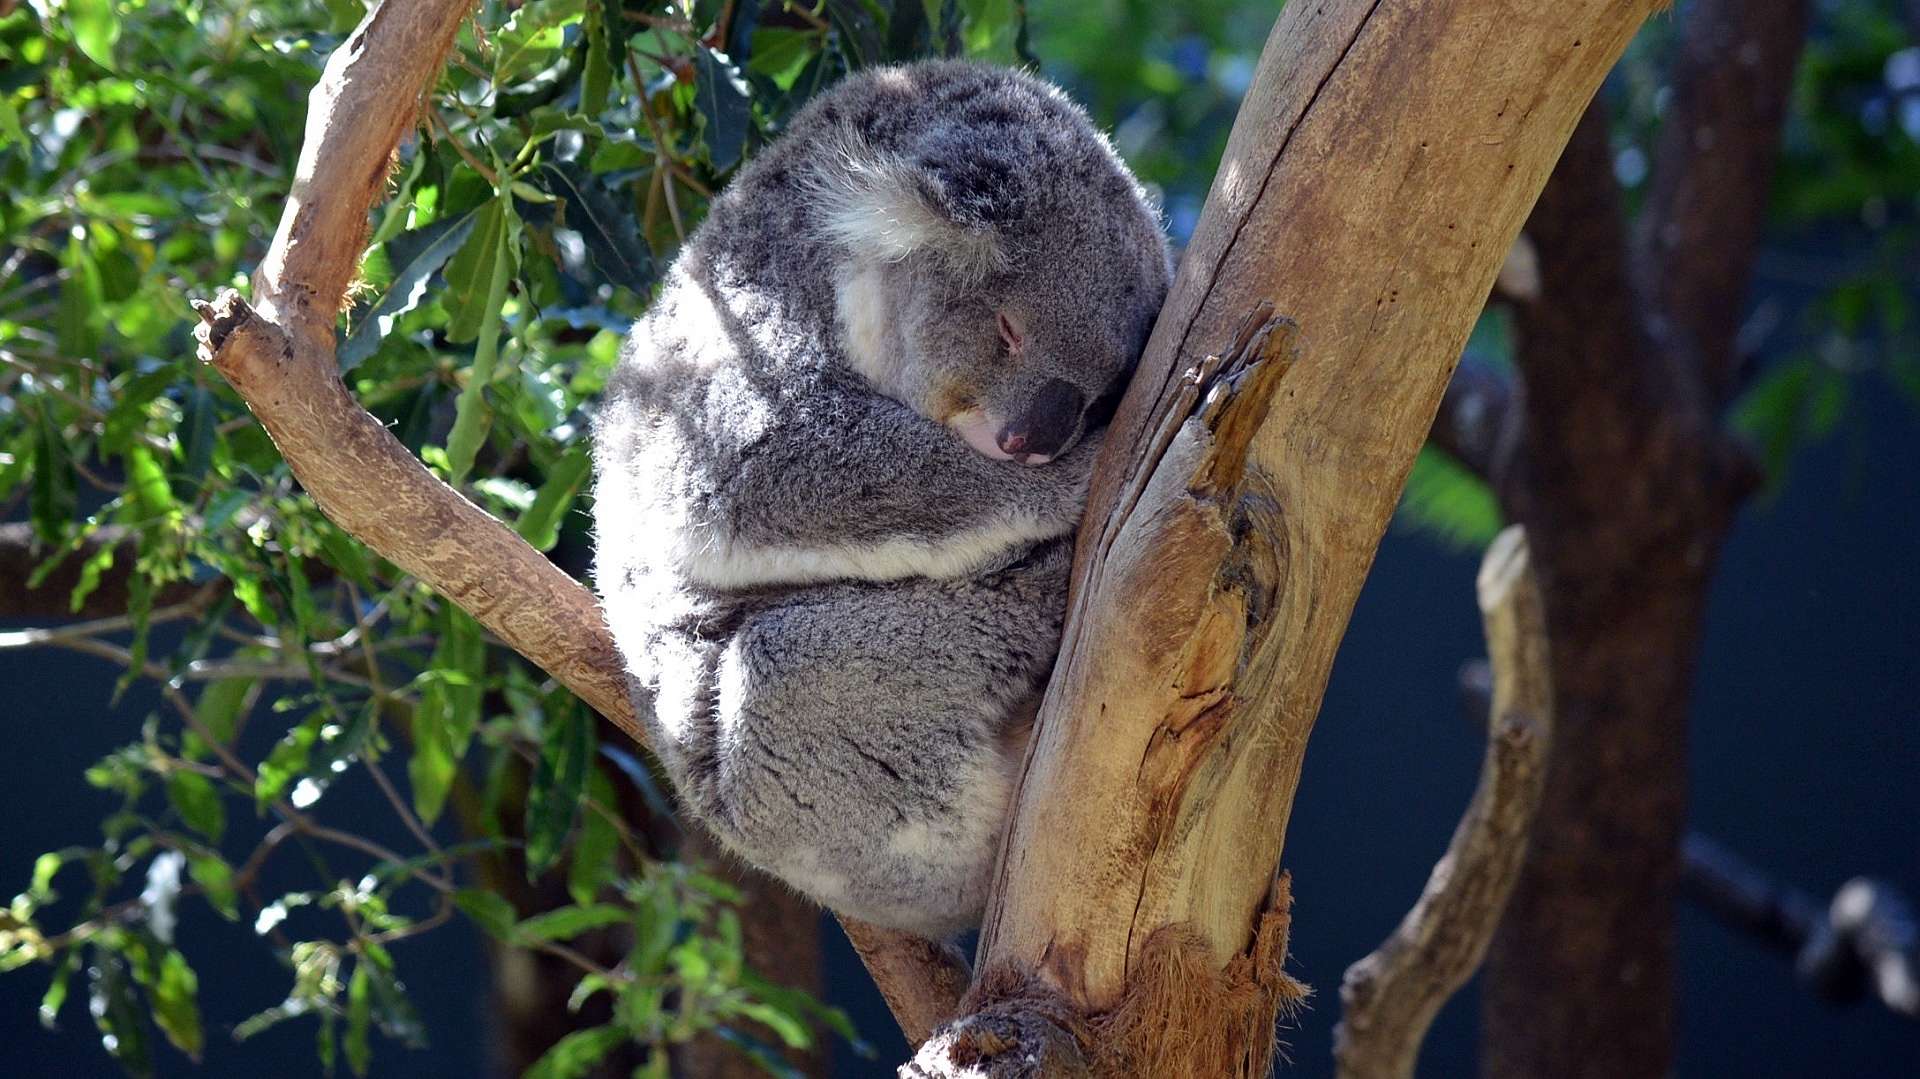 Koala Sleeping In The Winter Sun At Taronga Park Zoo By Lonewolf6738